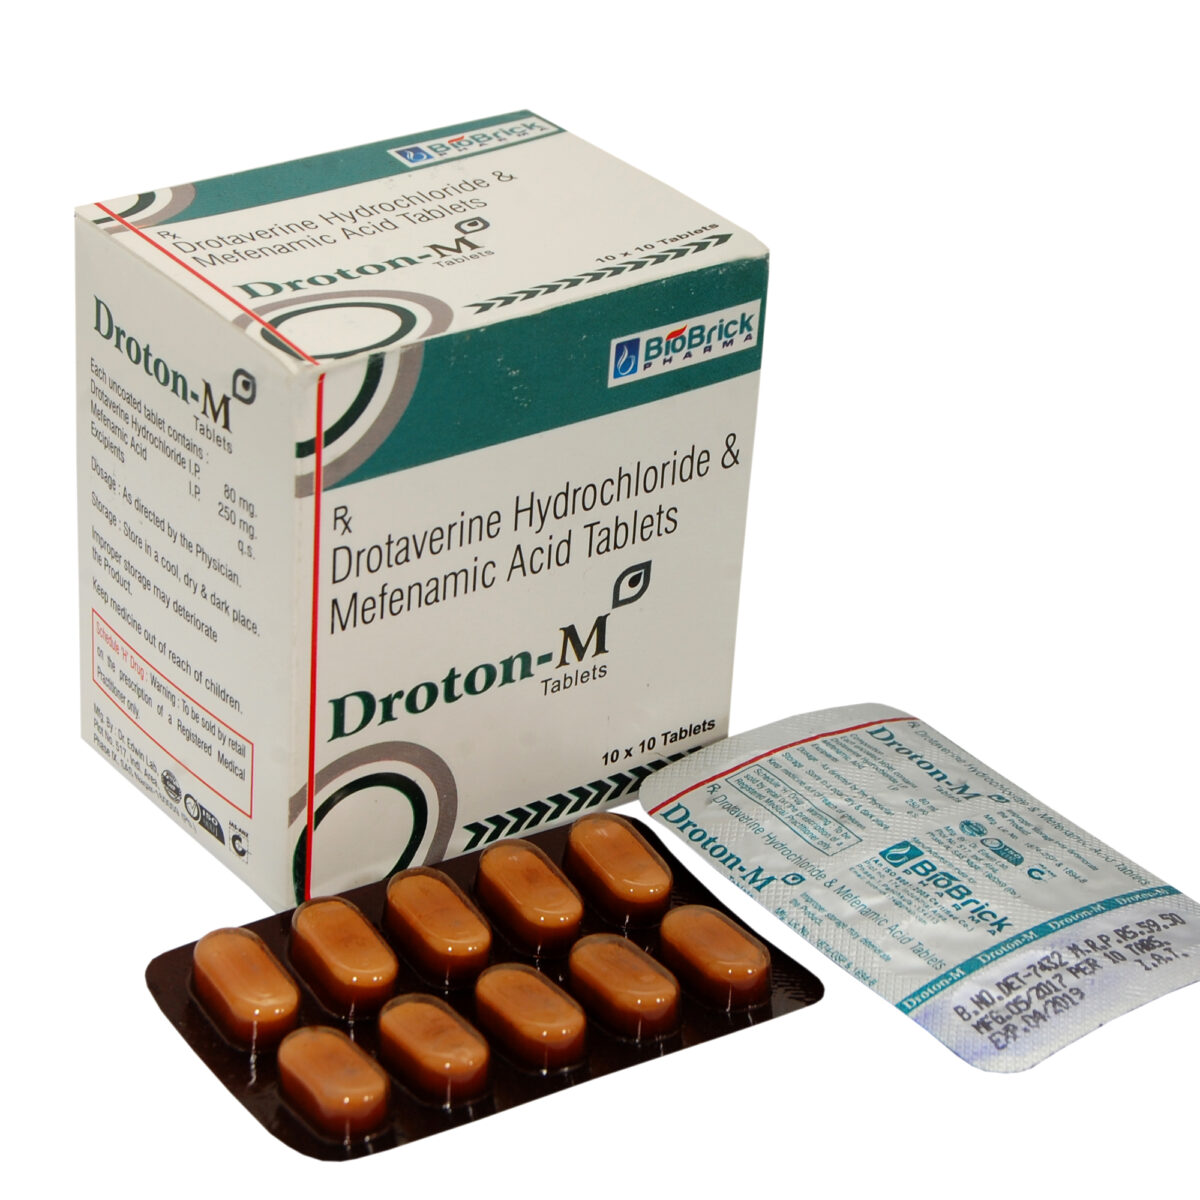 Drotaverine Mefenamic Acid Tablets, Treatment: menstrual cramps